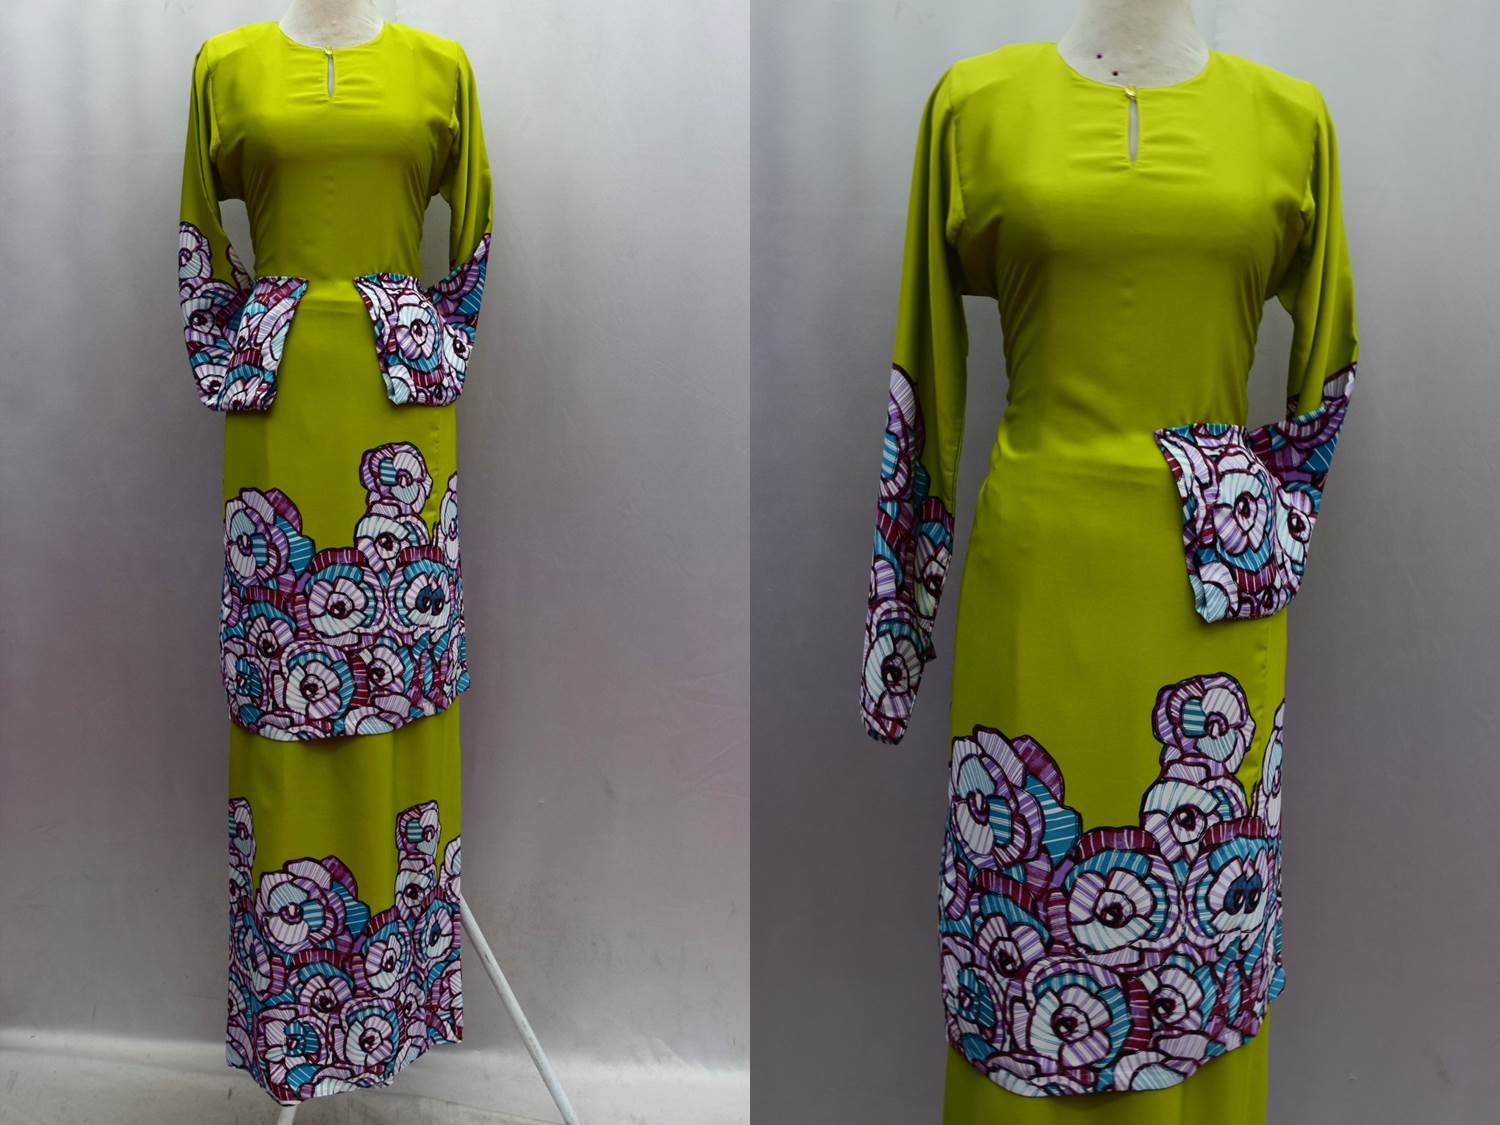  Kilang Baju Malaysia pemborong pakaian kilang jahit baju 